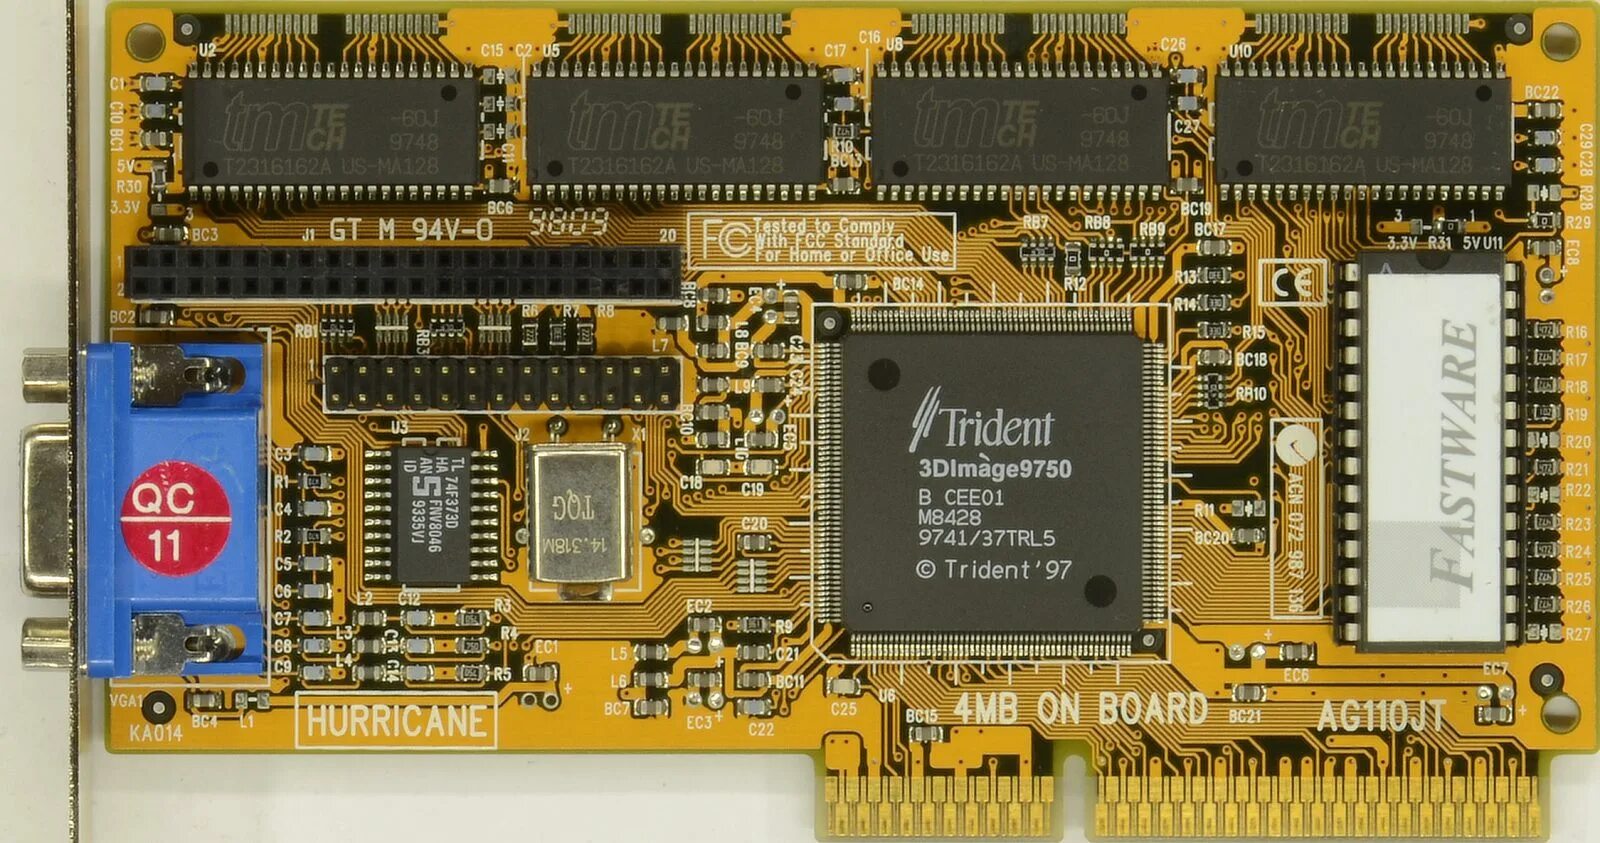 Trident script. Trident 3d image 9750. Trident VGA PCI. VGA 50 МГЦ. Trident m1-h.